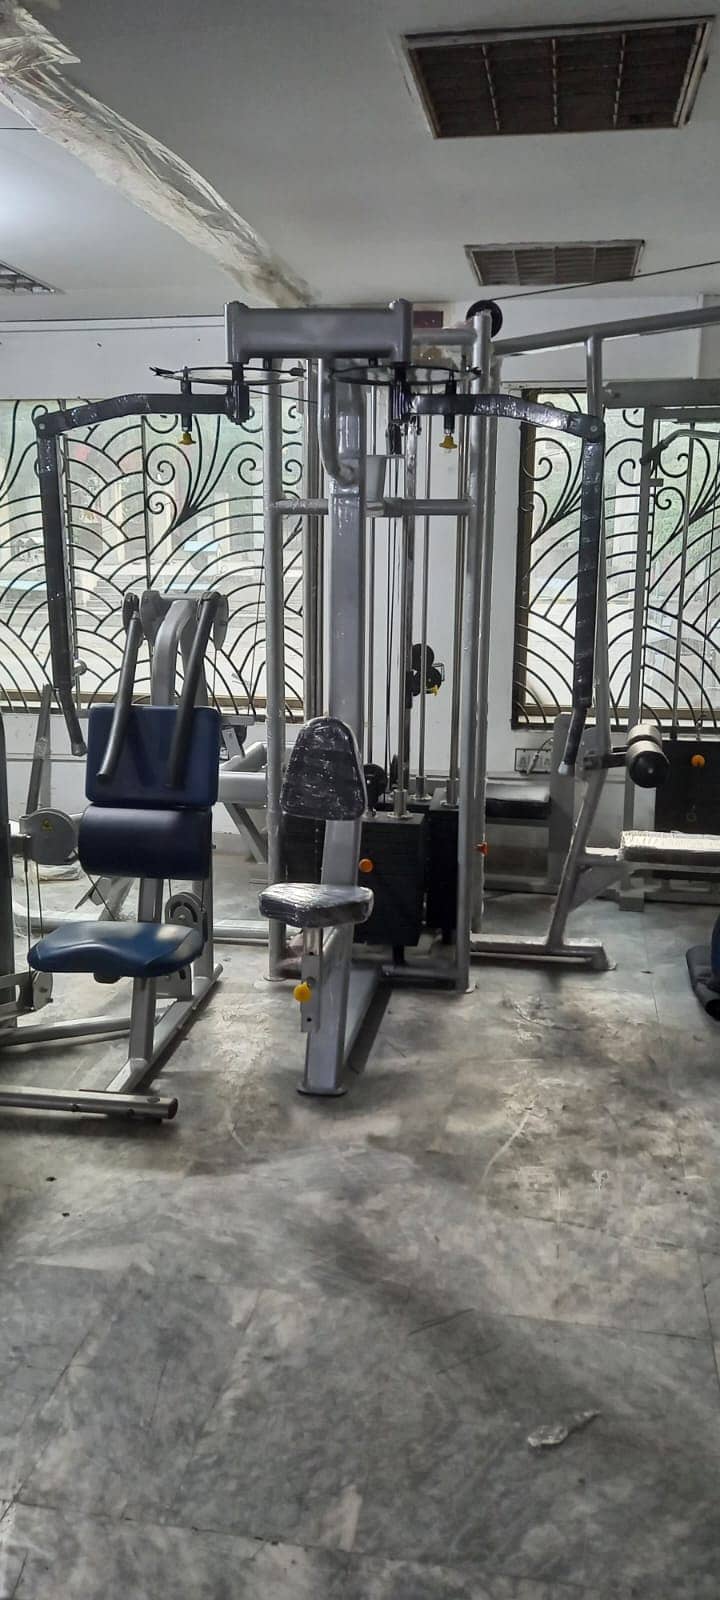 Power Rack Smith Trainer functional gym setup dumbbell treadmill plate 11